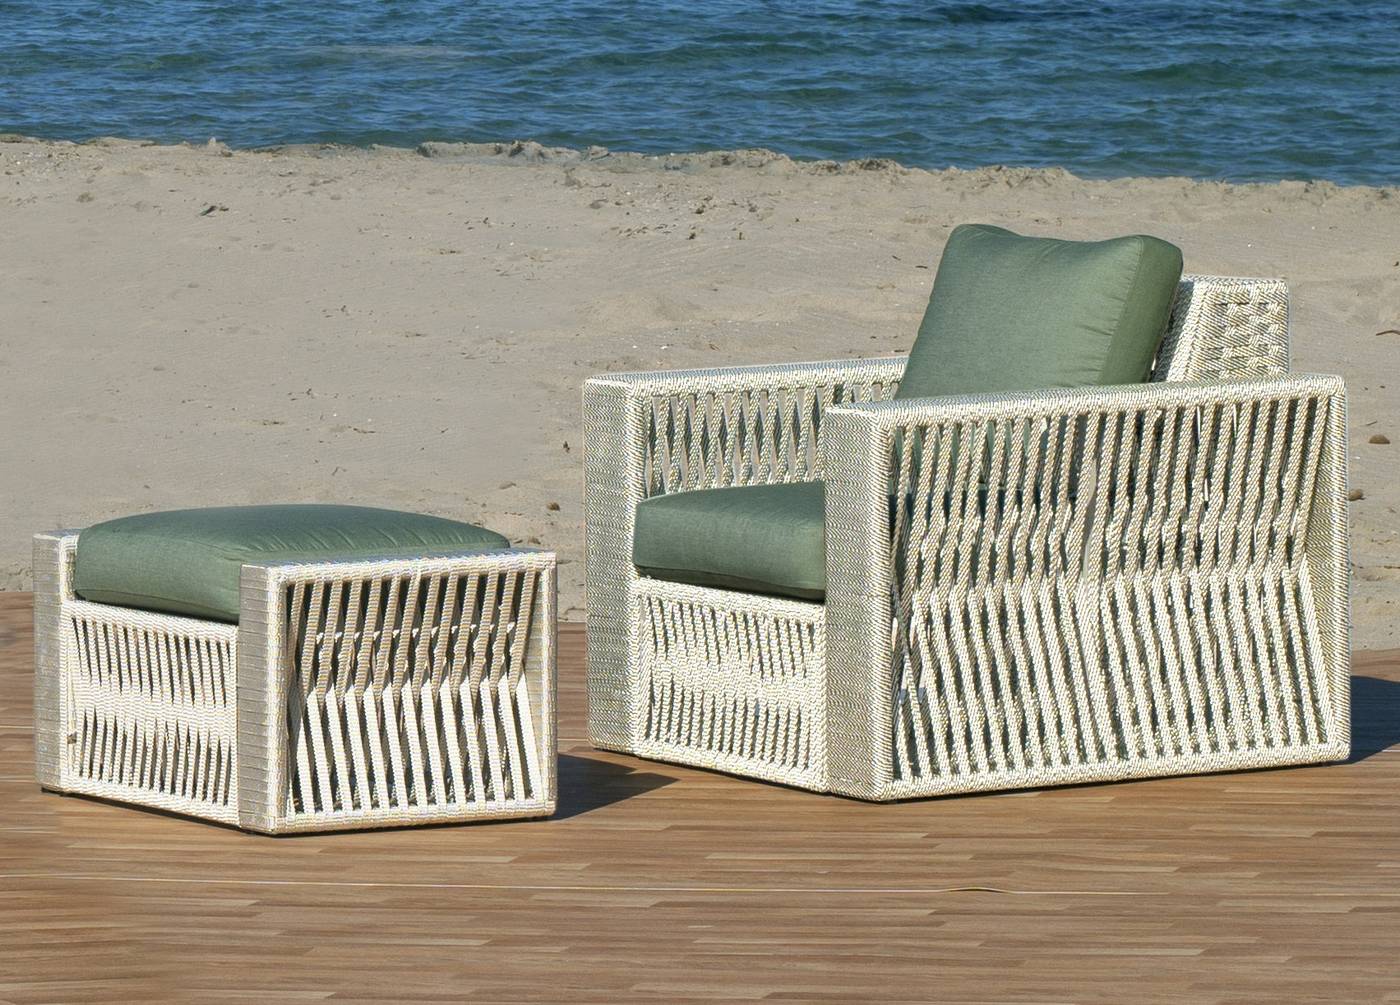 Set Aluminio Prusia-8 - Conjunto aluminio-cuerda: 1 sofá de 3 plazas + 2 sillones + 1 mesa de centro + cojines. Disponible en color blanco, gris, oro o champagne.